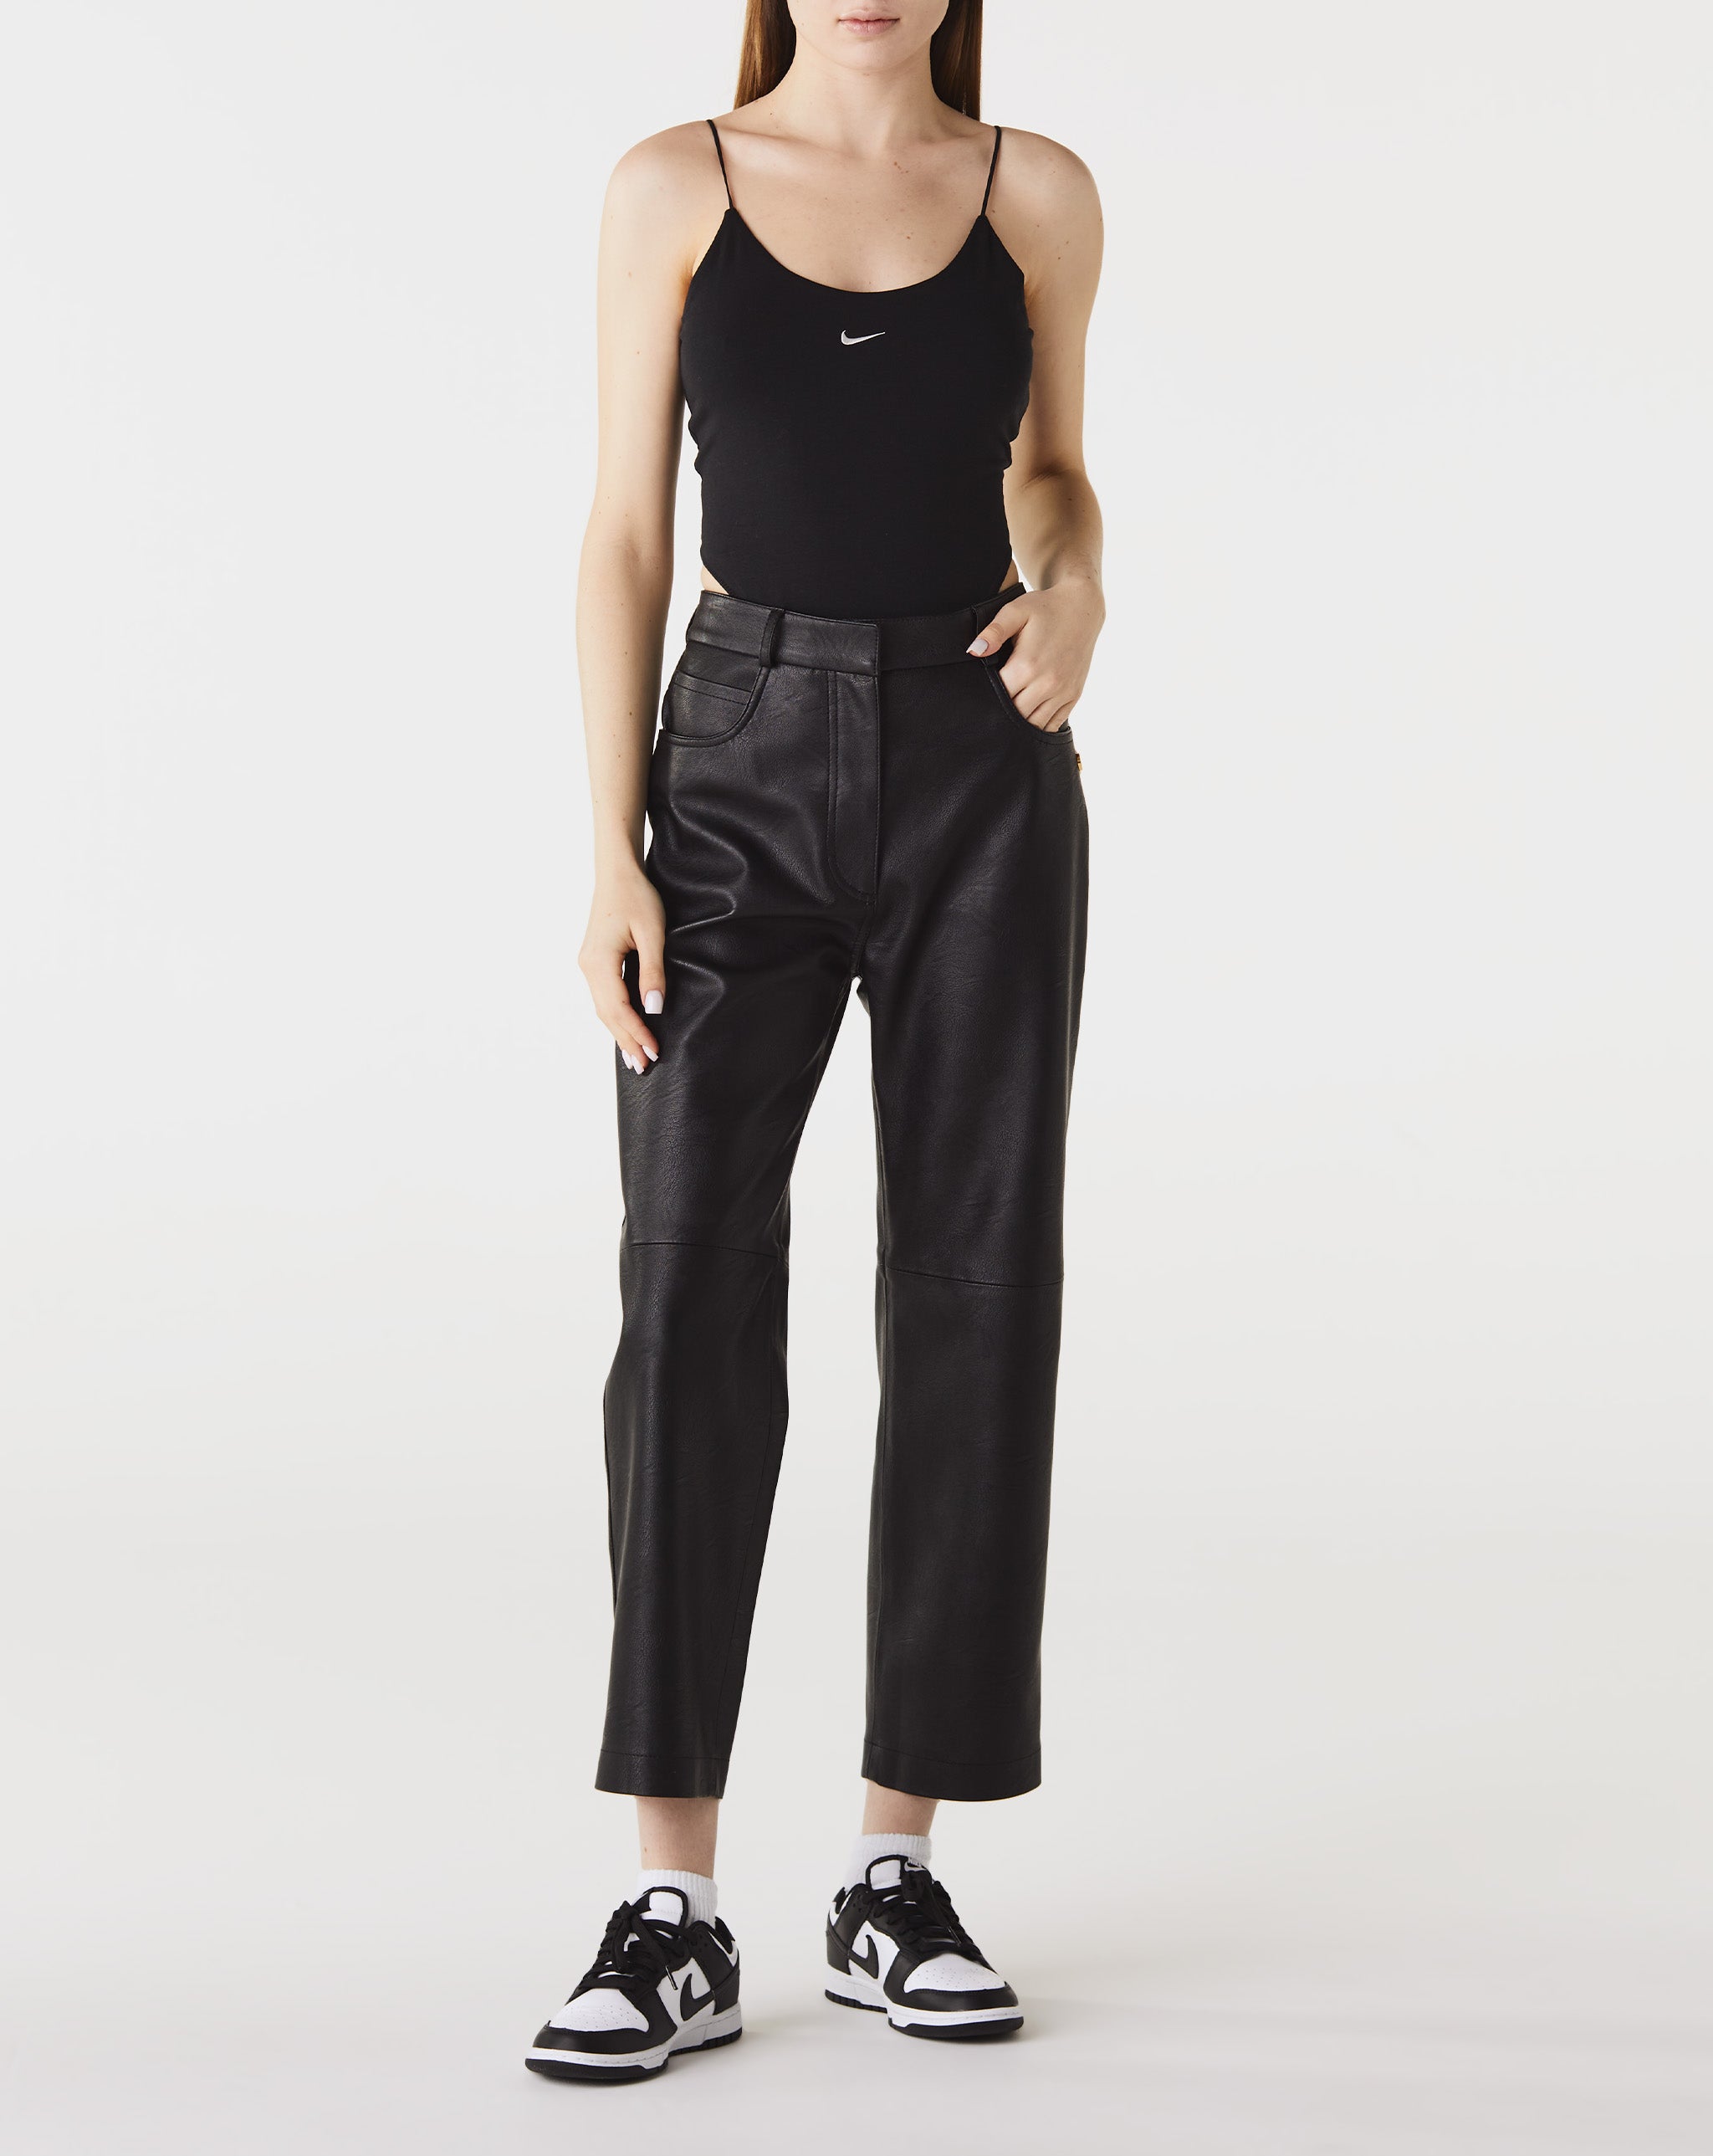 Nike Women's Chill Knit Cami Bodysuit  - XHIBITION